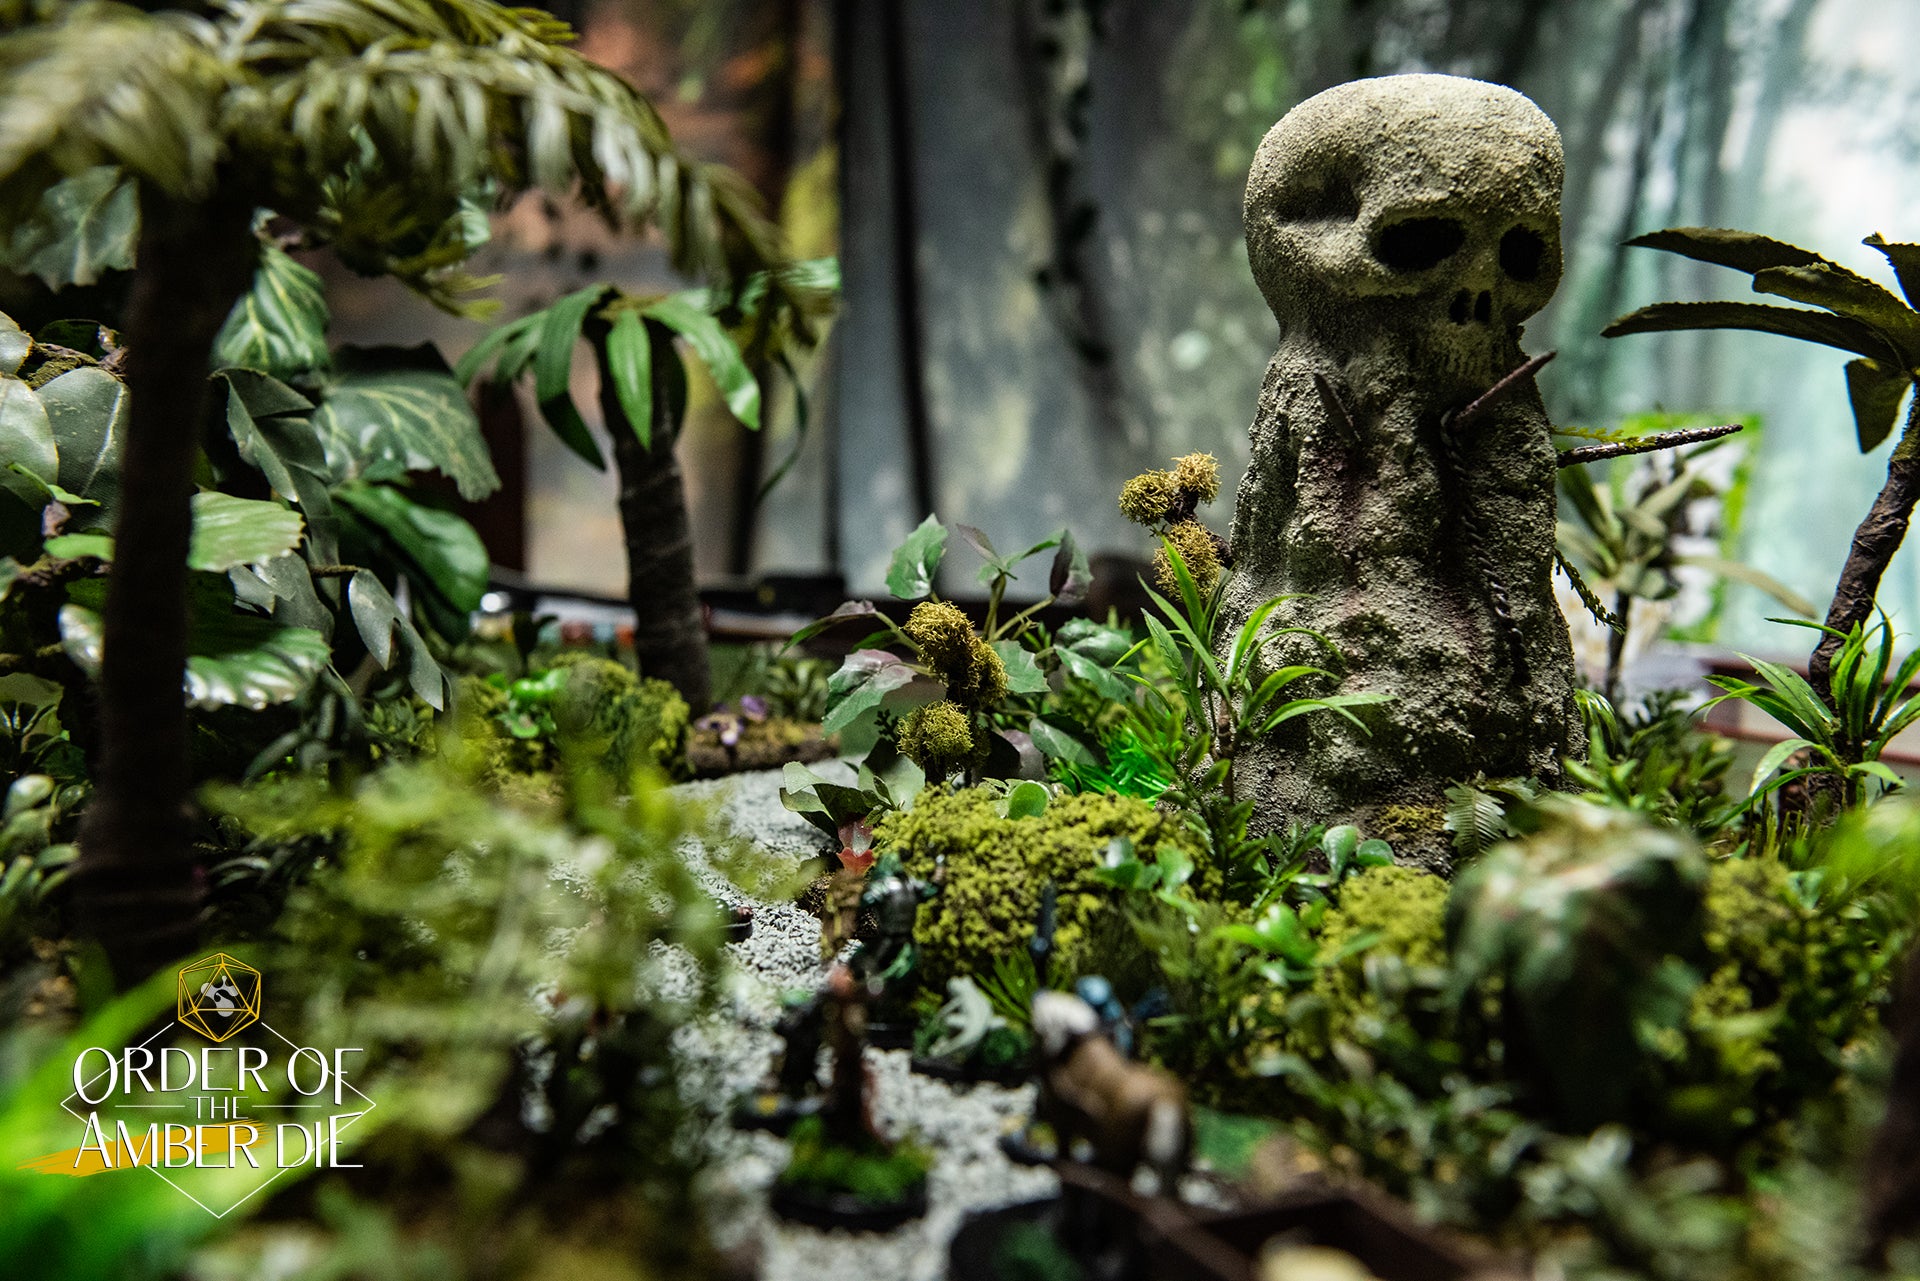 A close up view of mini figures set into a jungle setting